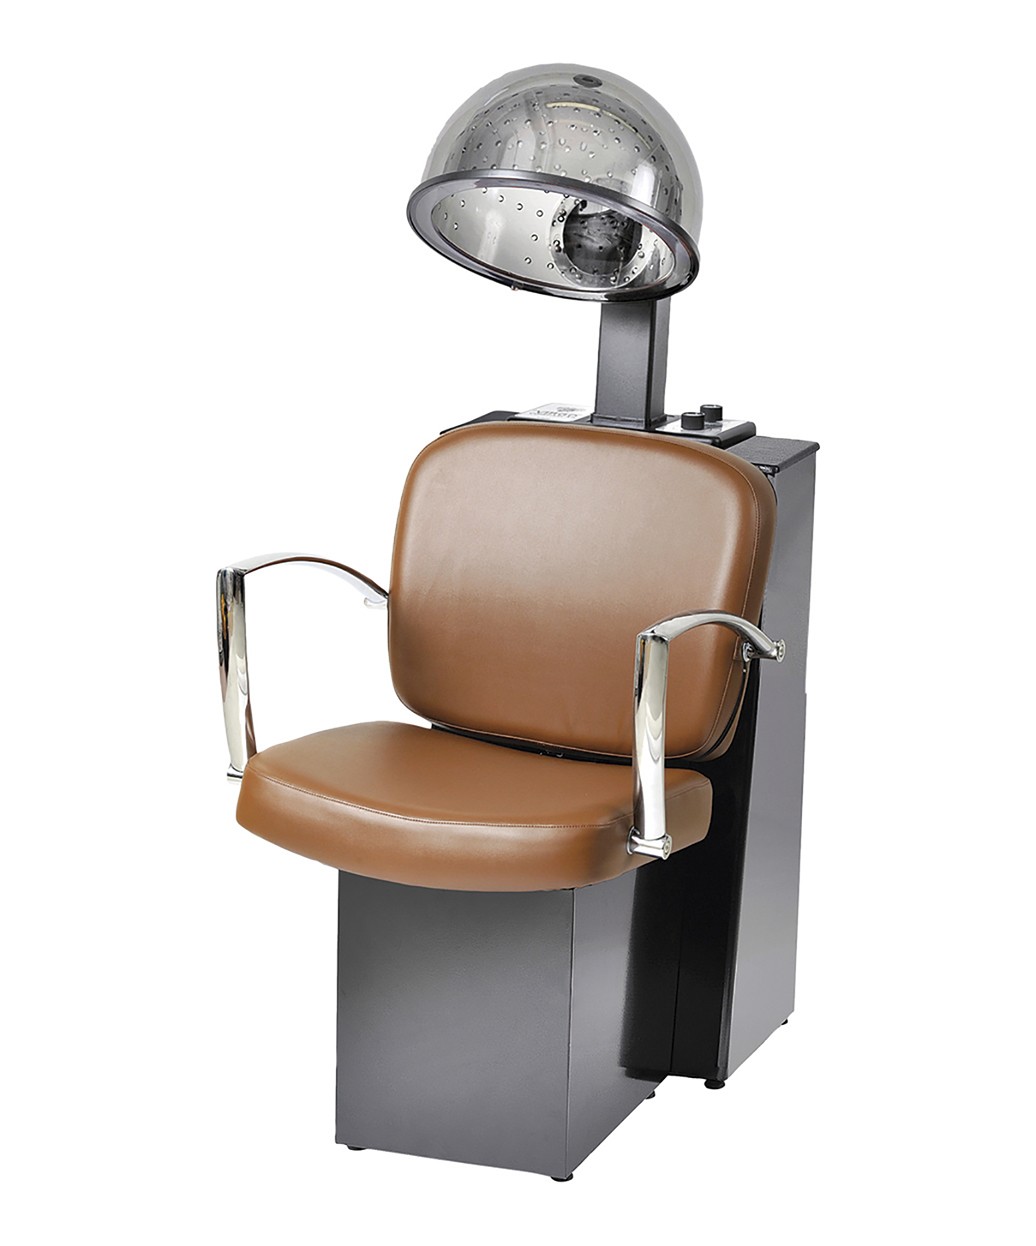 Pibbs 3769 Pisa Dryer Chair Only- Shown with Optional Virgo Dryer